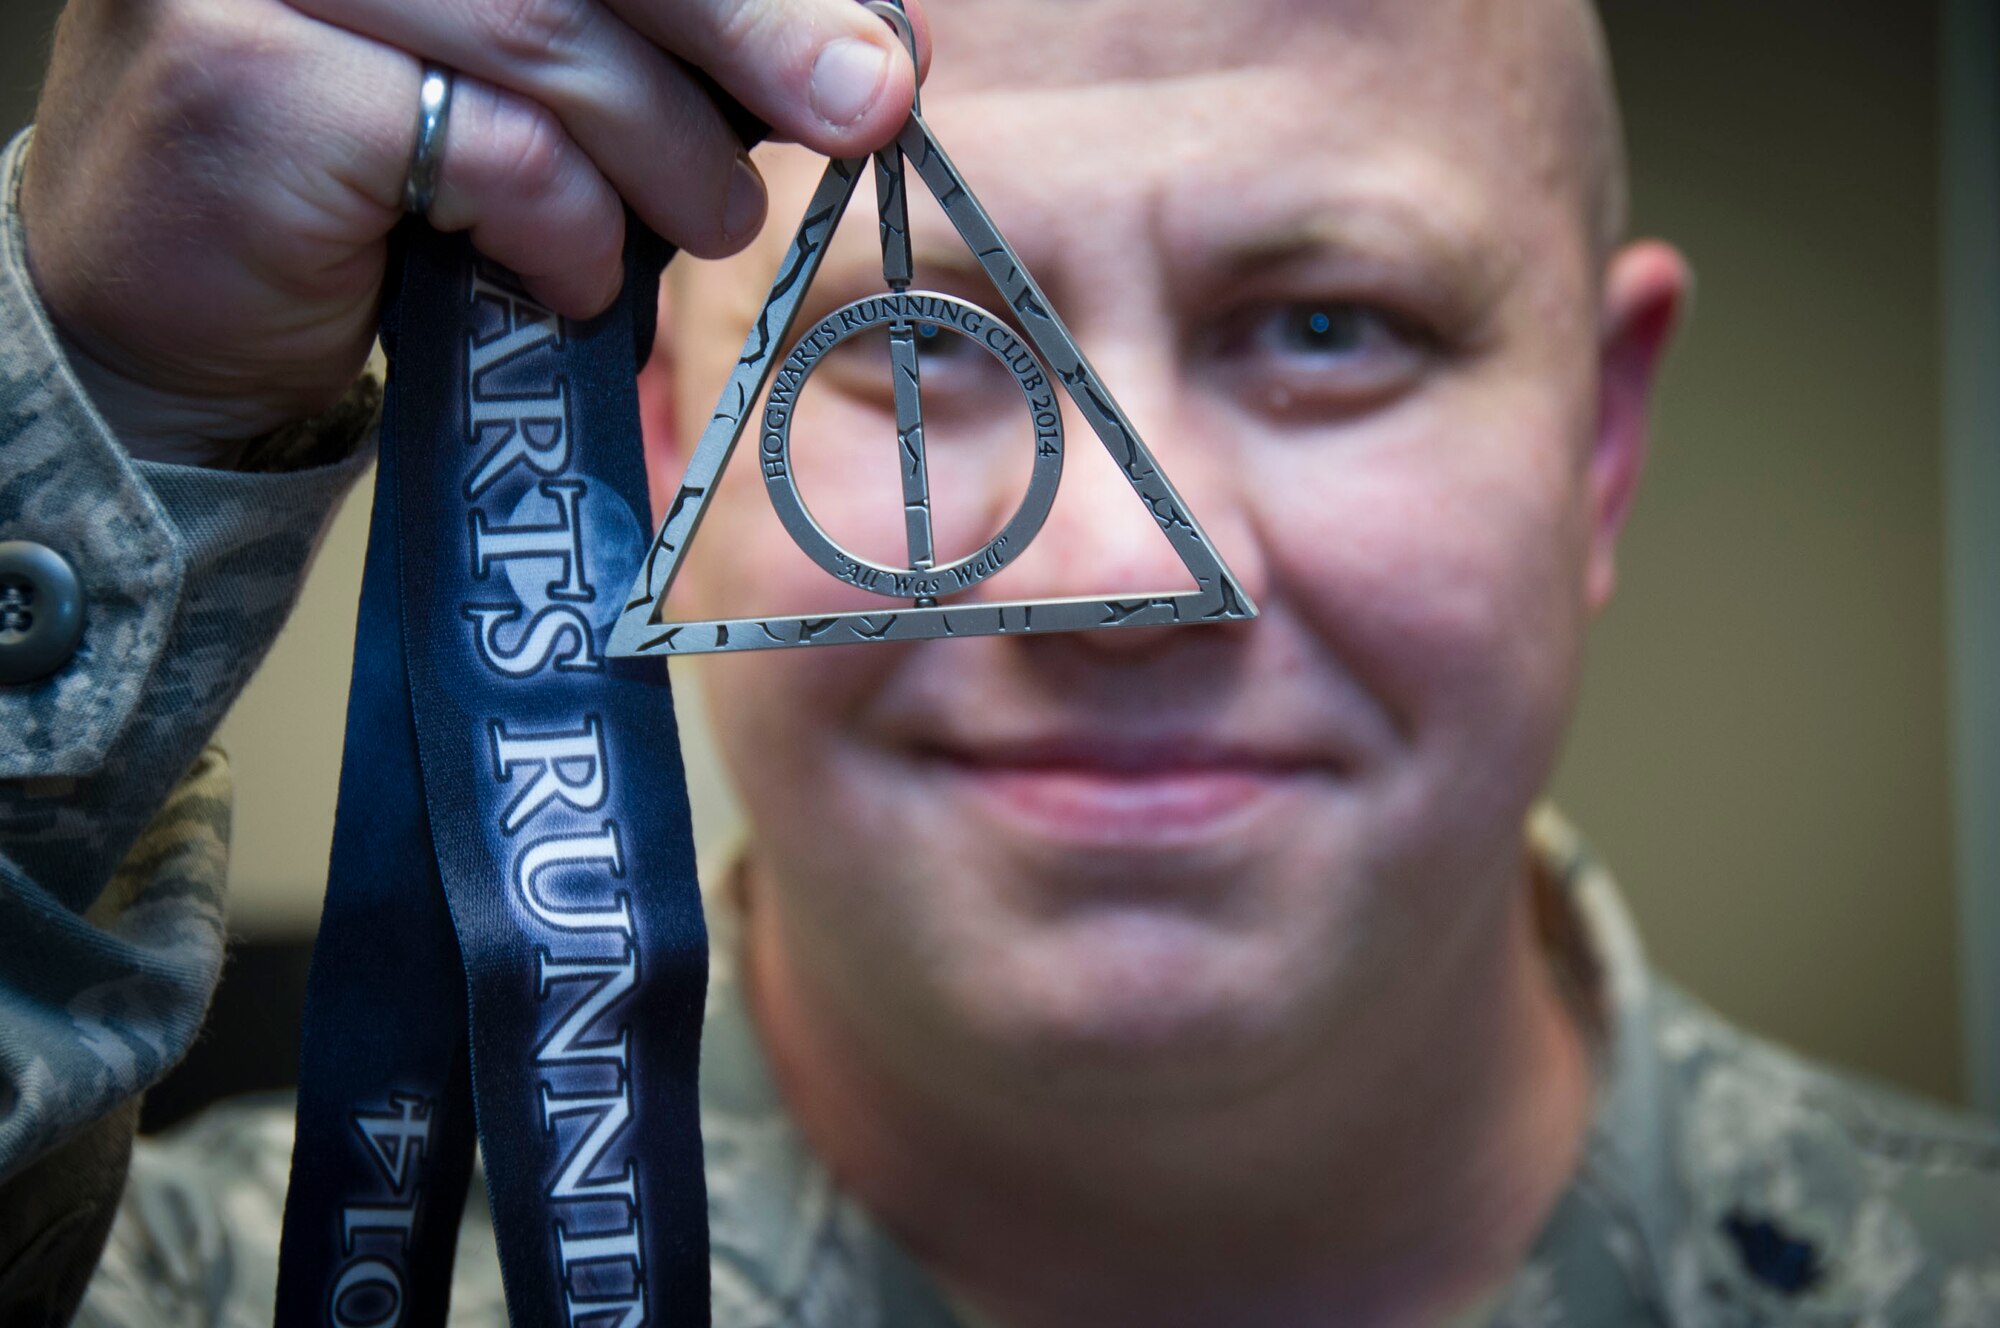 Biggs shows off one of the Hogwarts Running Club medals. (Matt Ebarb)